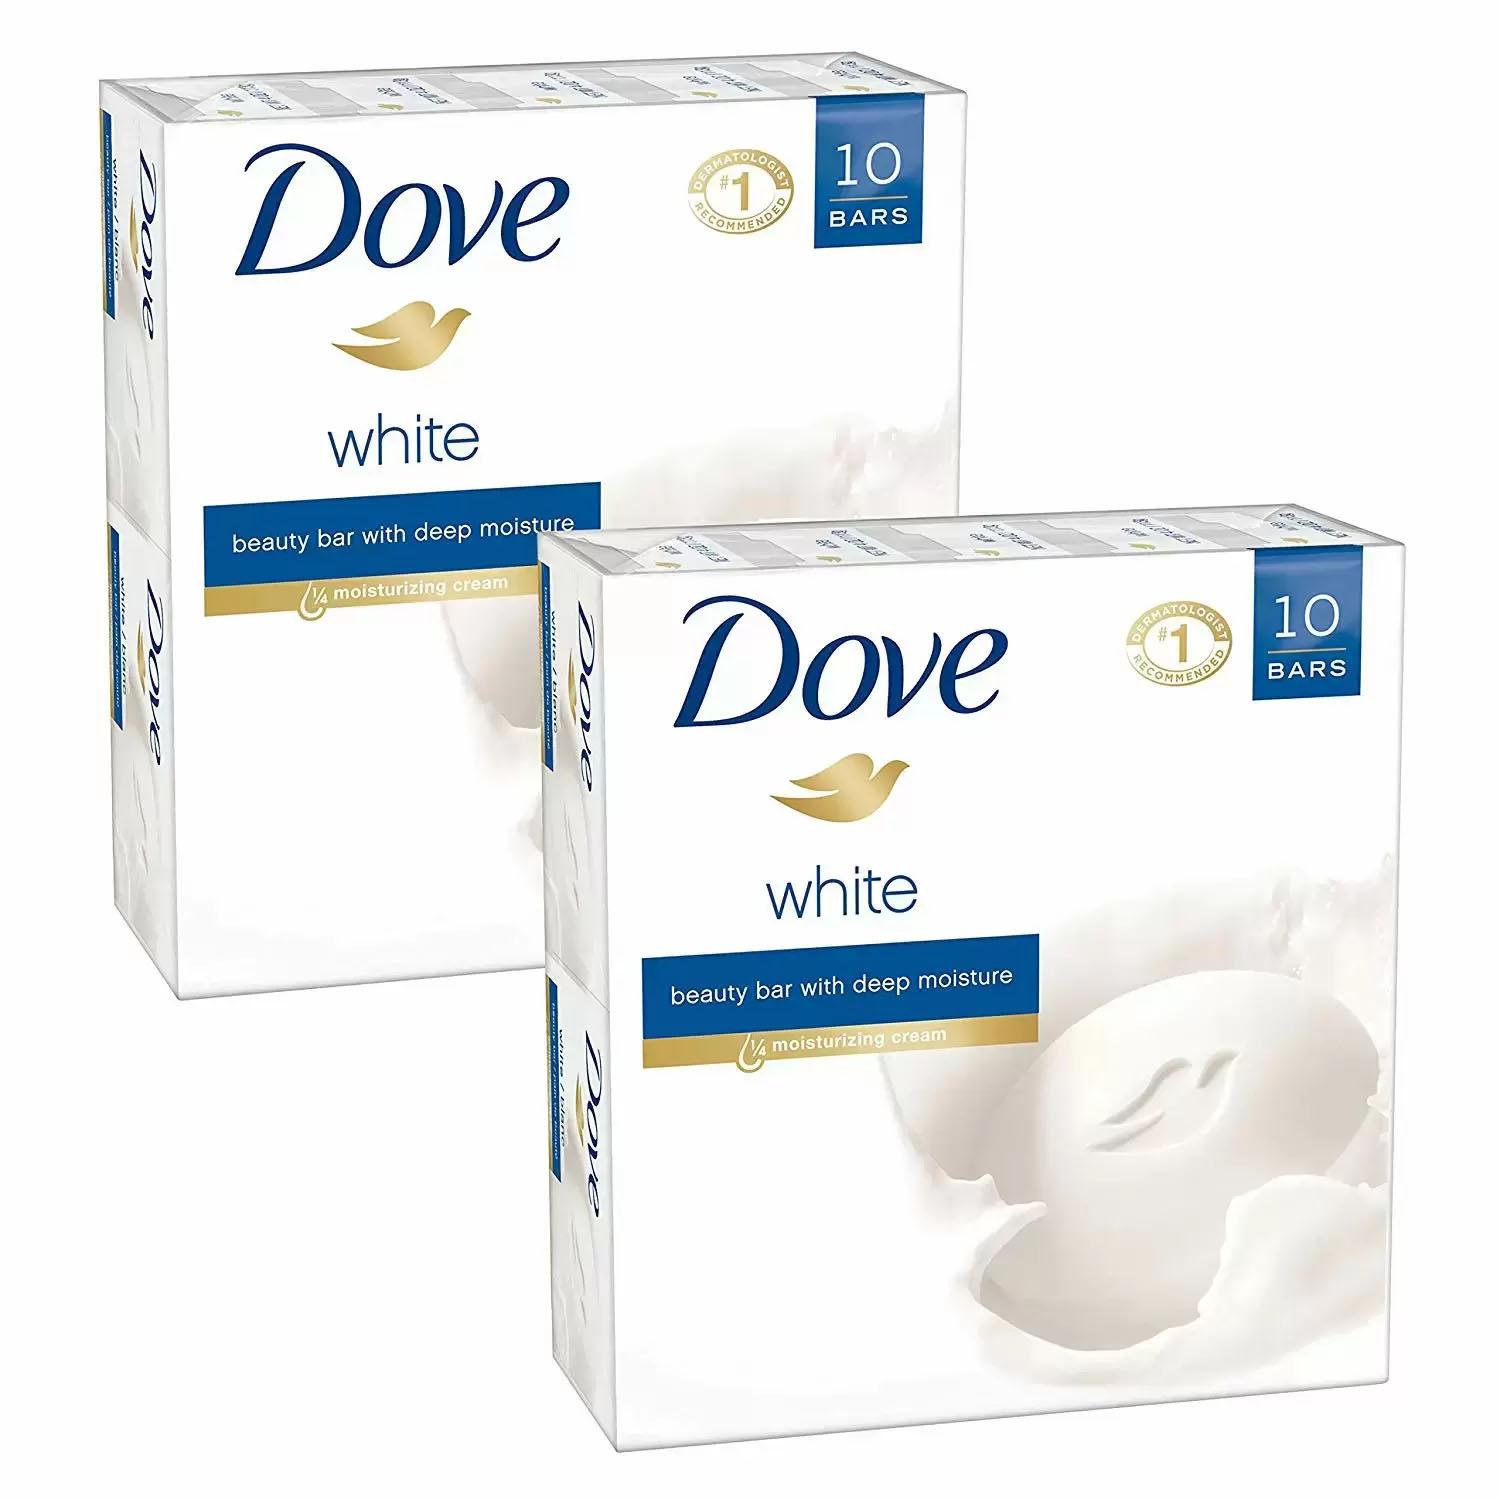 20 Dove Beauty Soap Bars for $13.99 Shipped